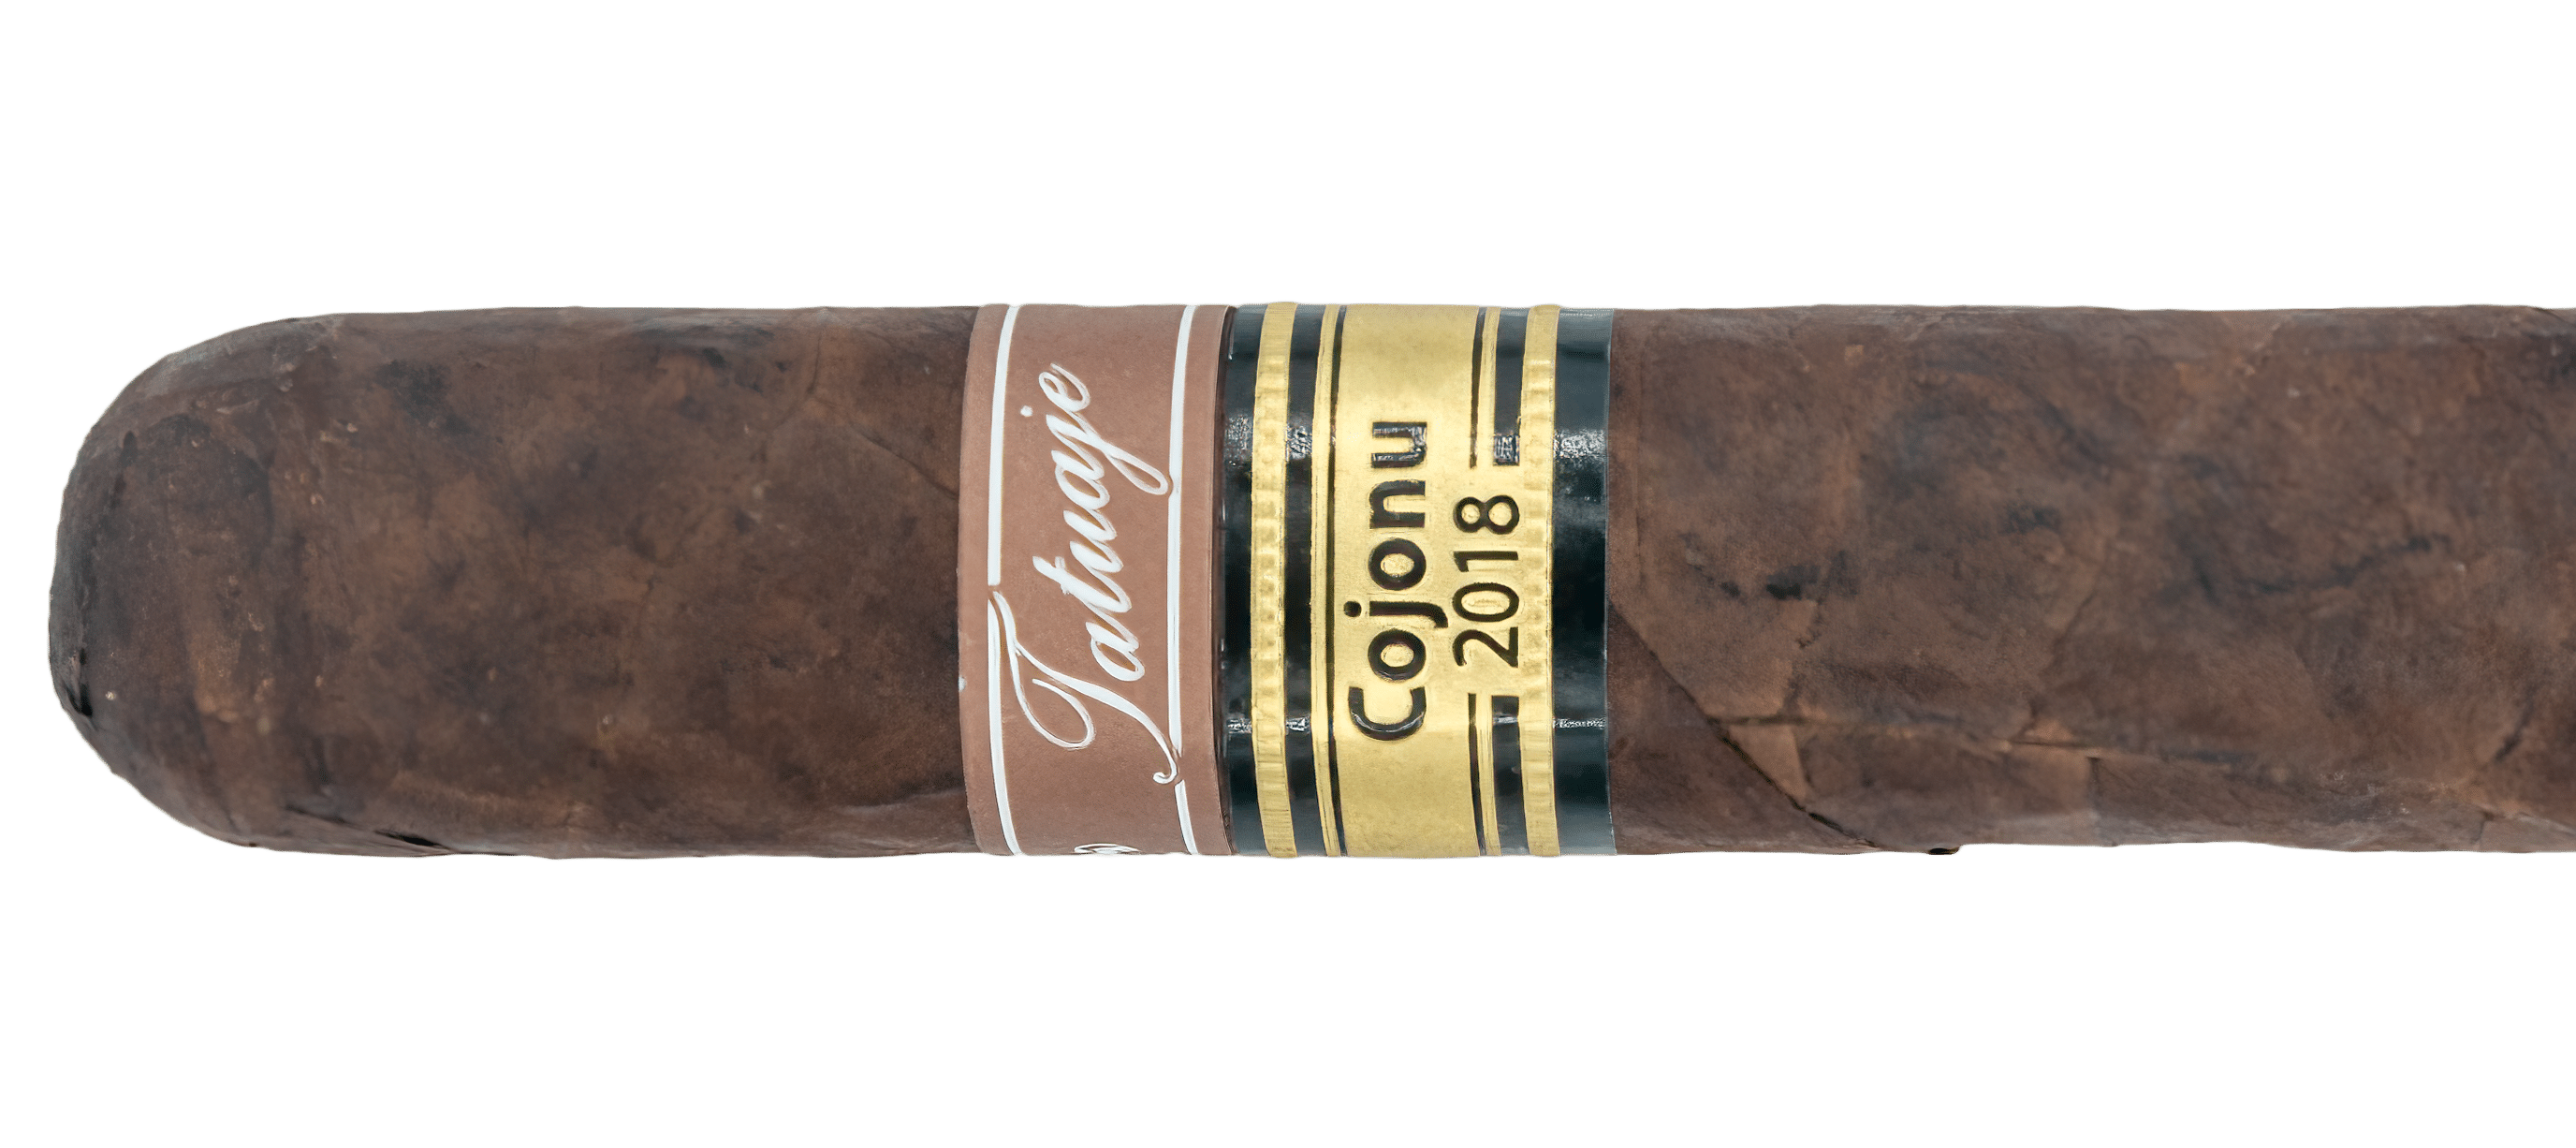 Tatuaje Cojonú 2018 - Blind Cigar Review